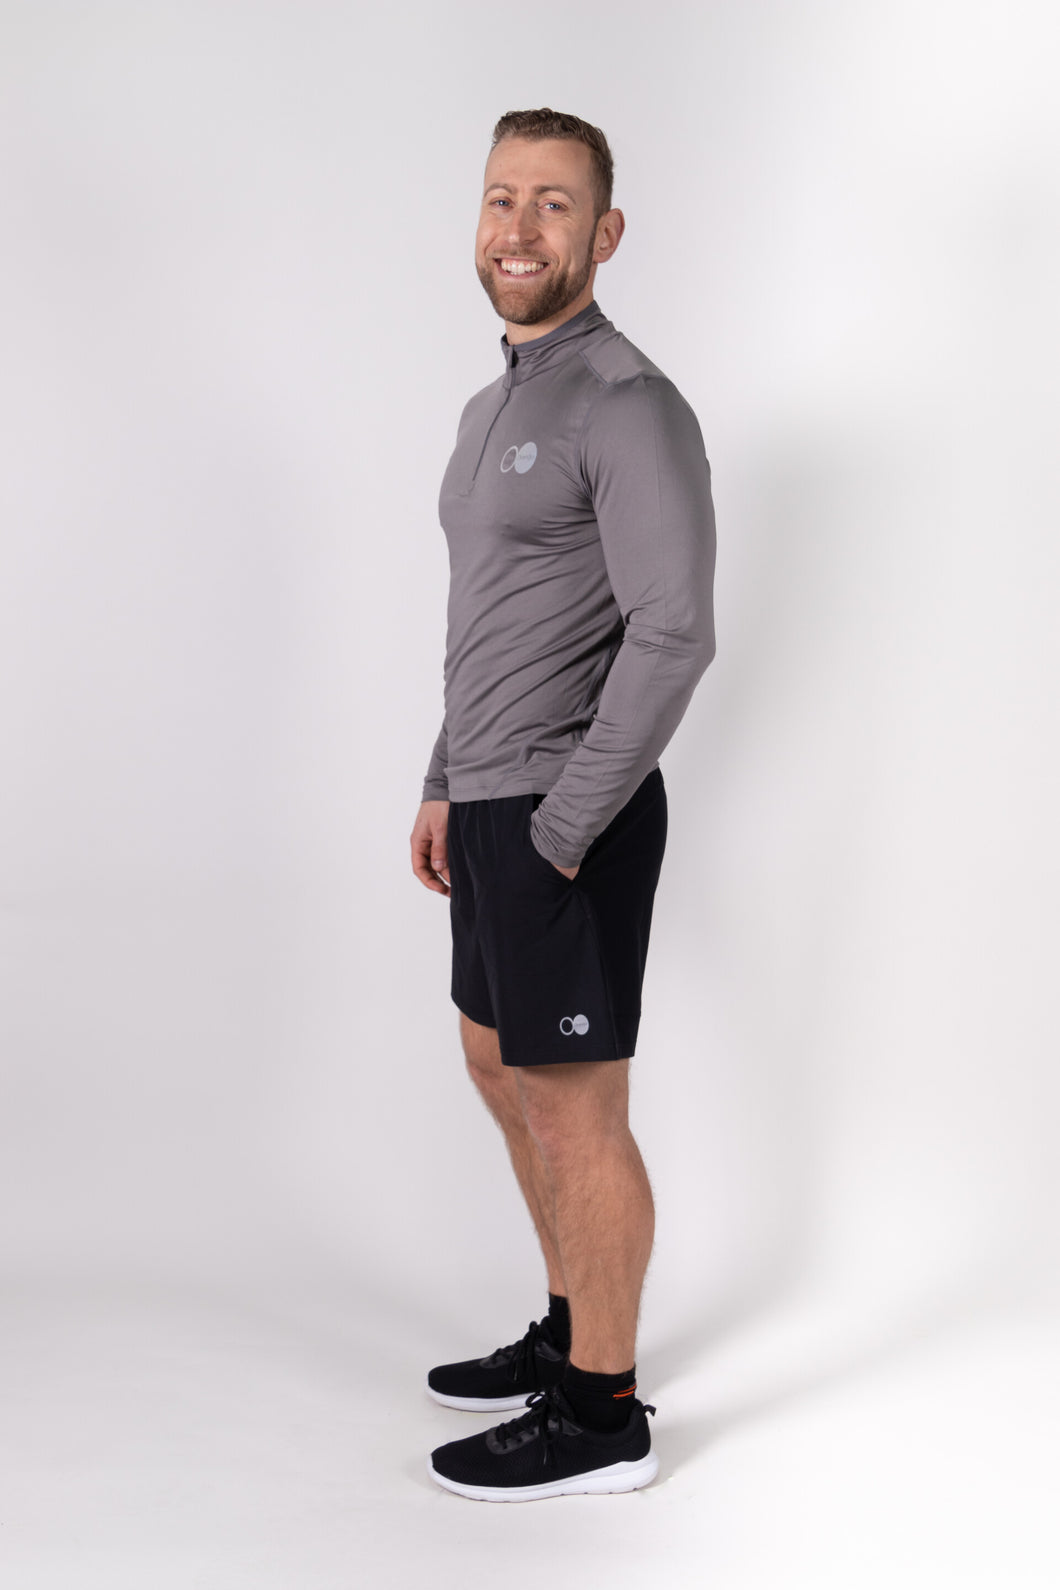 Orango Running - Mens T-shirt long sleeve with zipp - Steel Grey - 11018